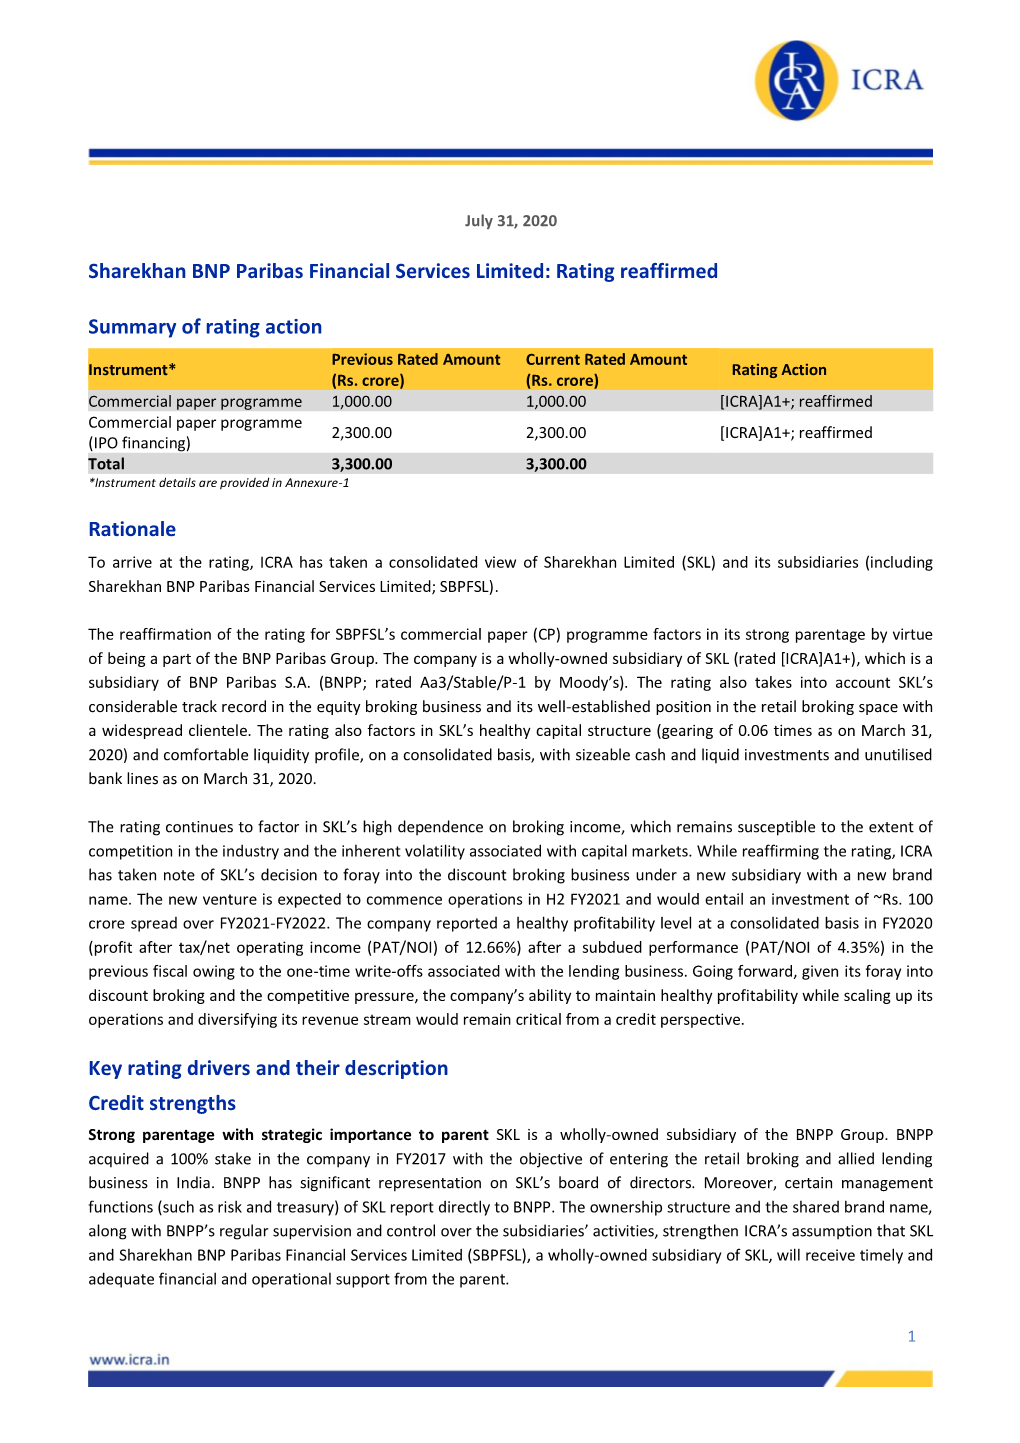 Sharekhan BNP Paribas Financial Services Limited: Rating Reaffirmed